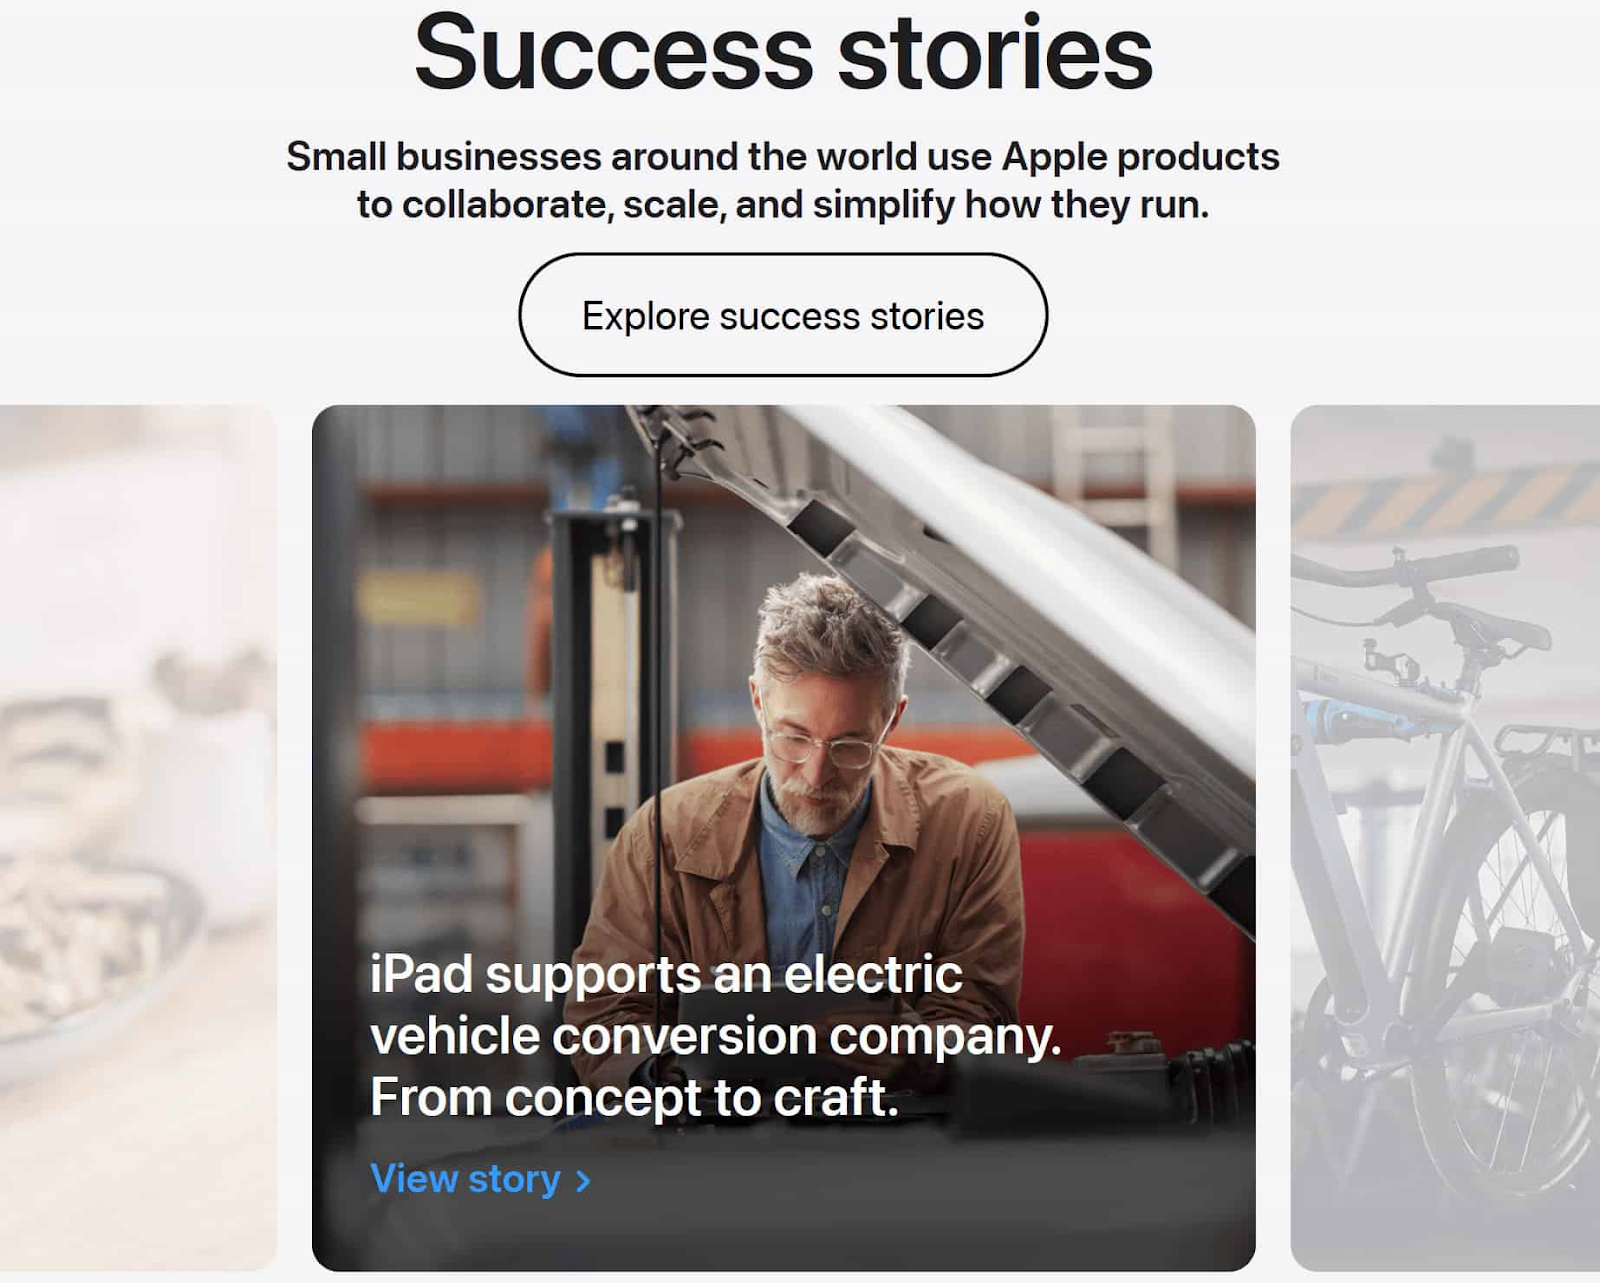 Apple’s "Success stories" section